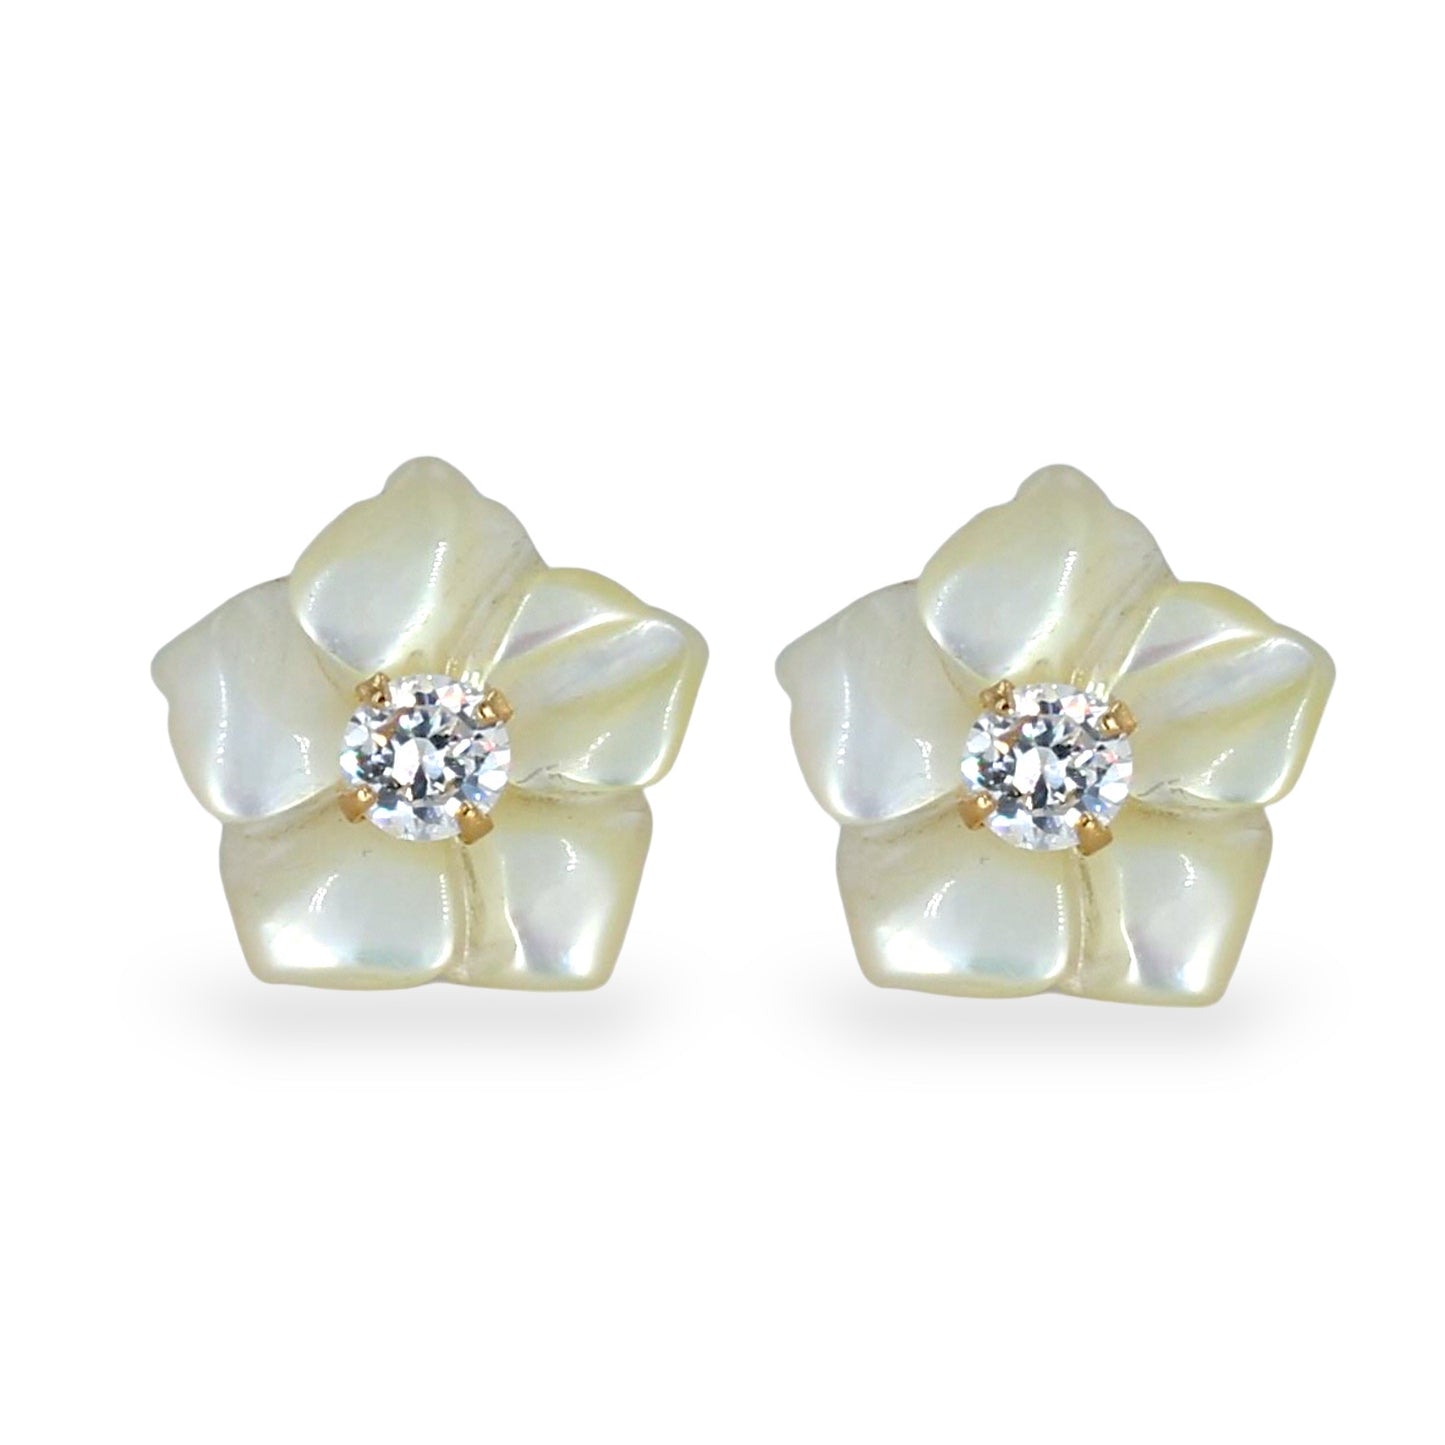 14k yellow gold mother pearl flower earrings